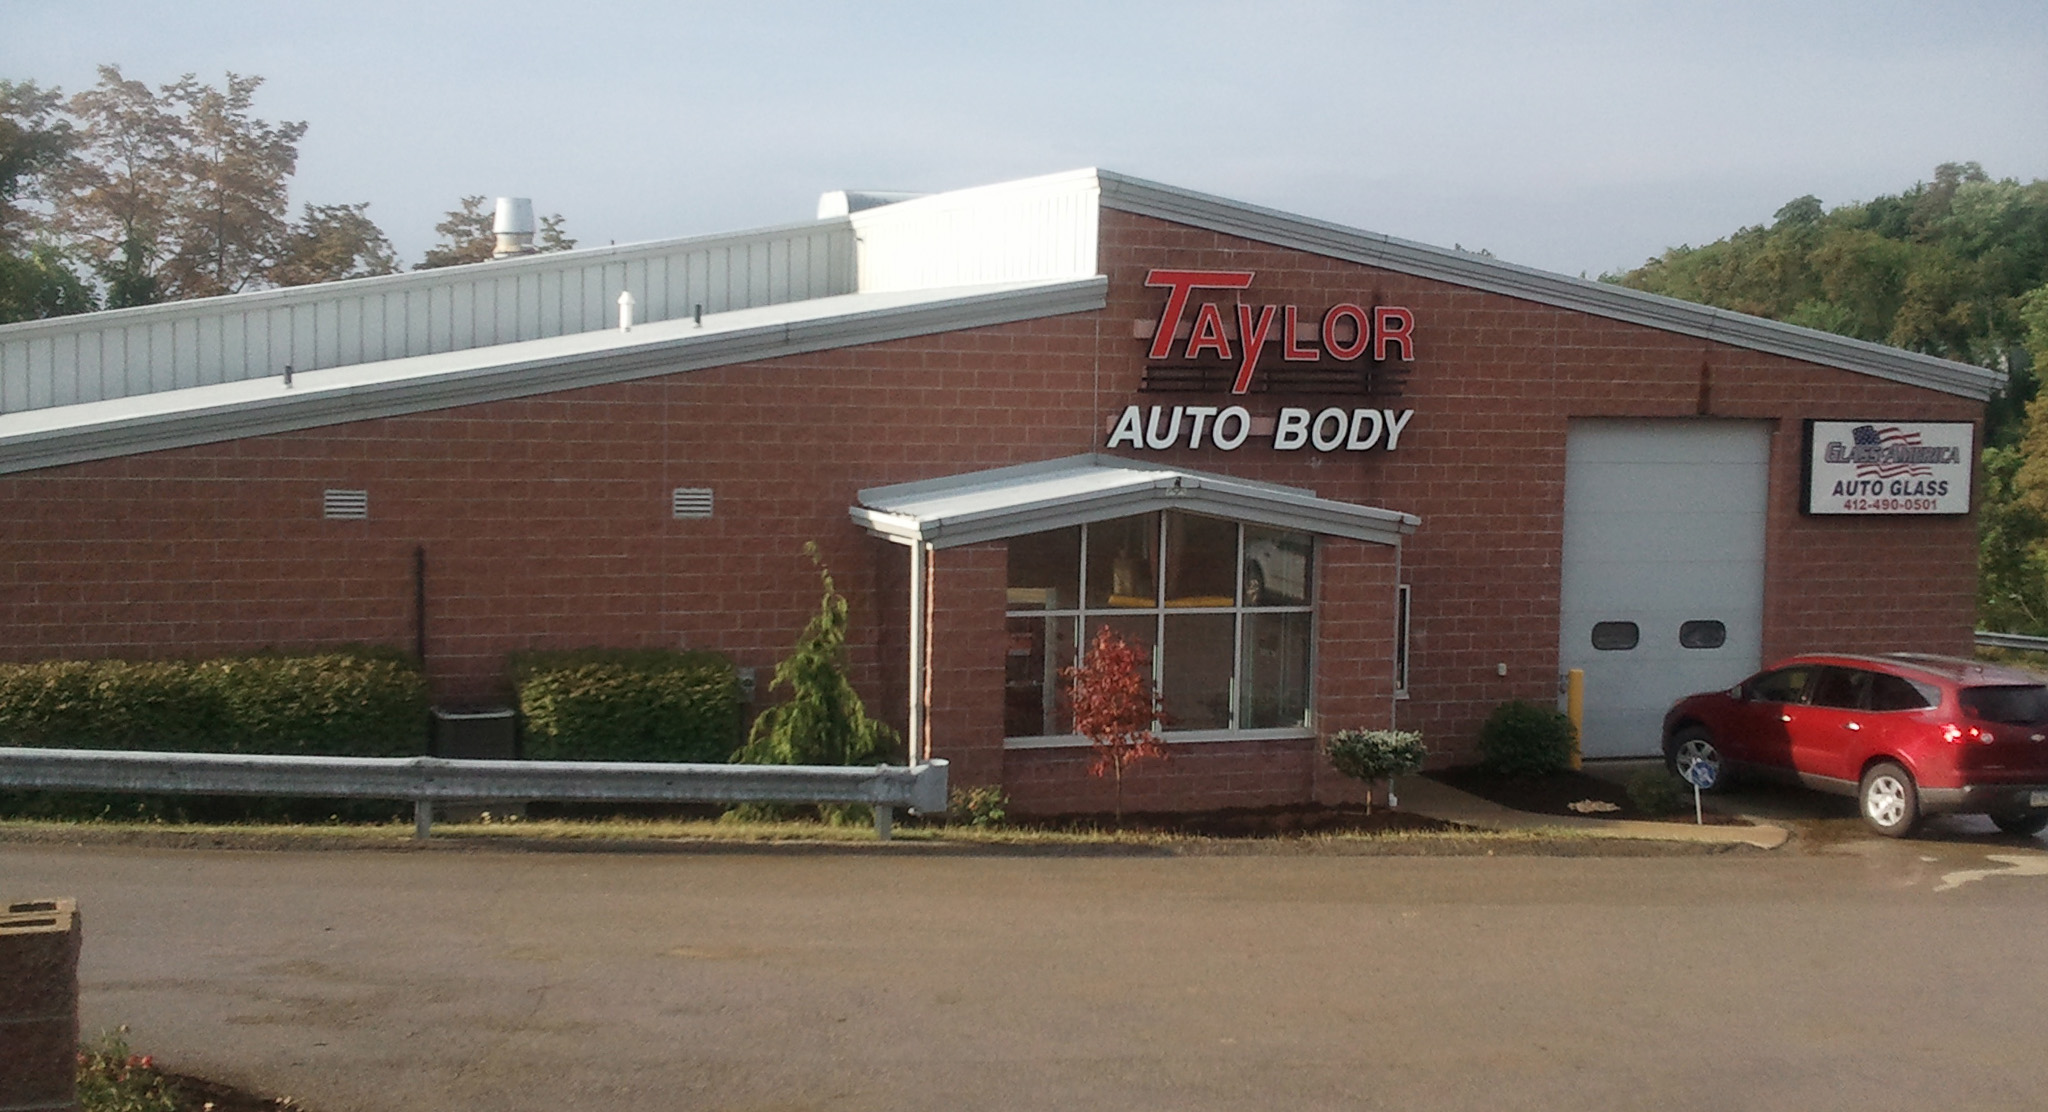 Taylor Auto Body